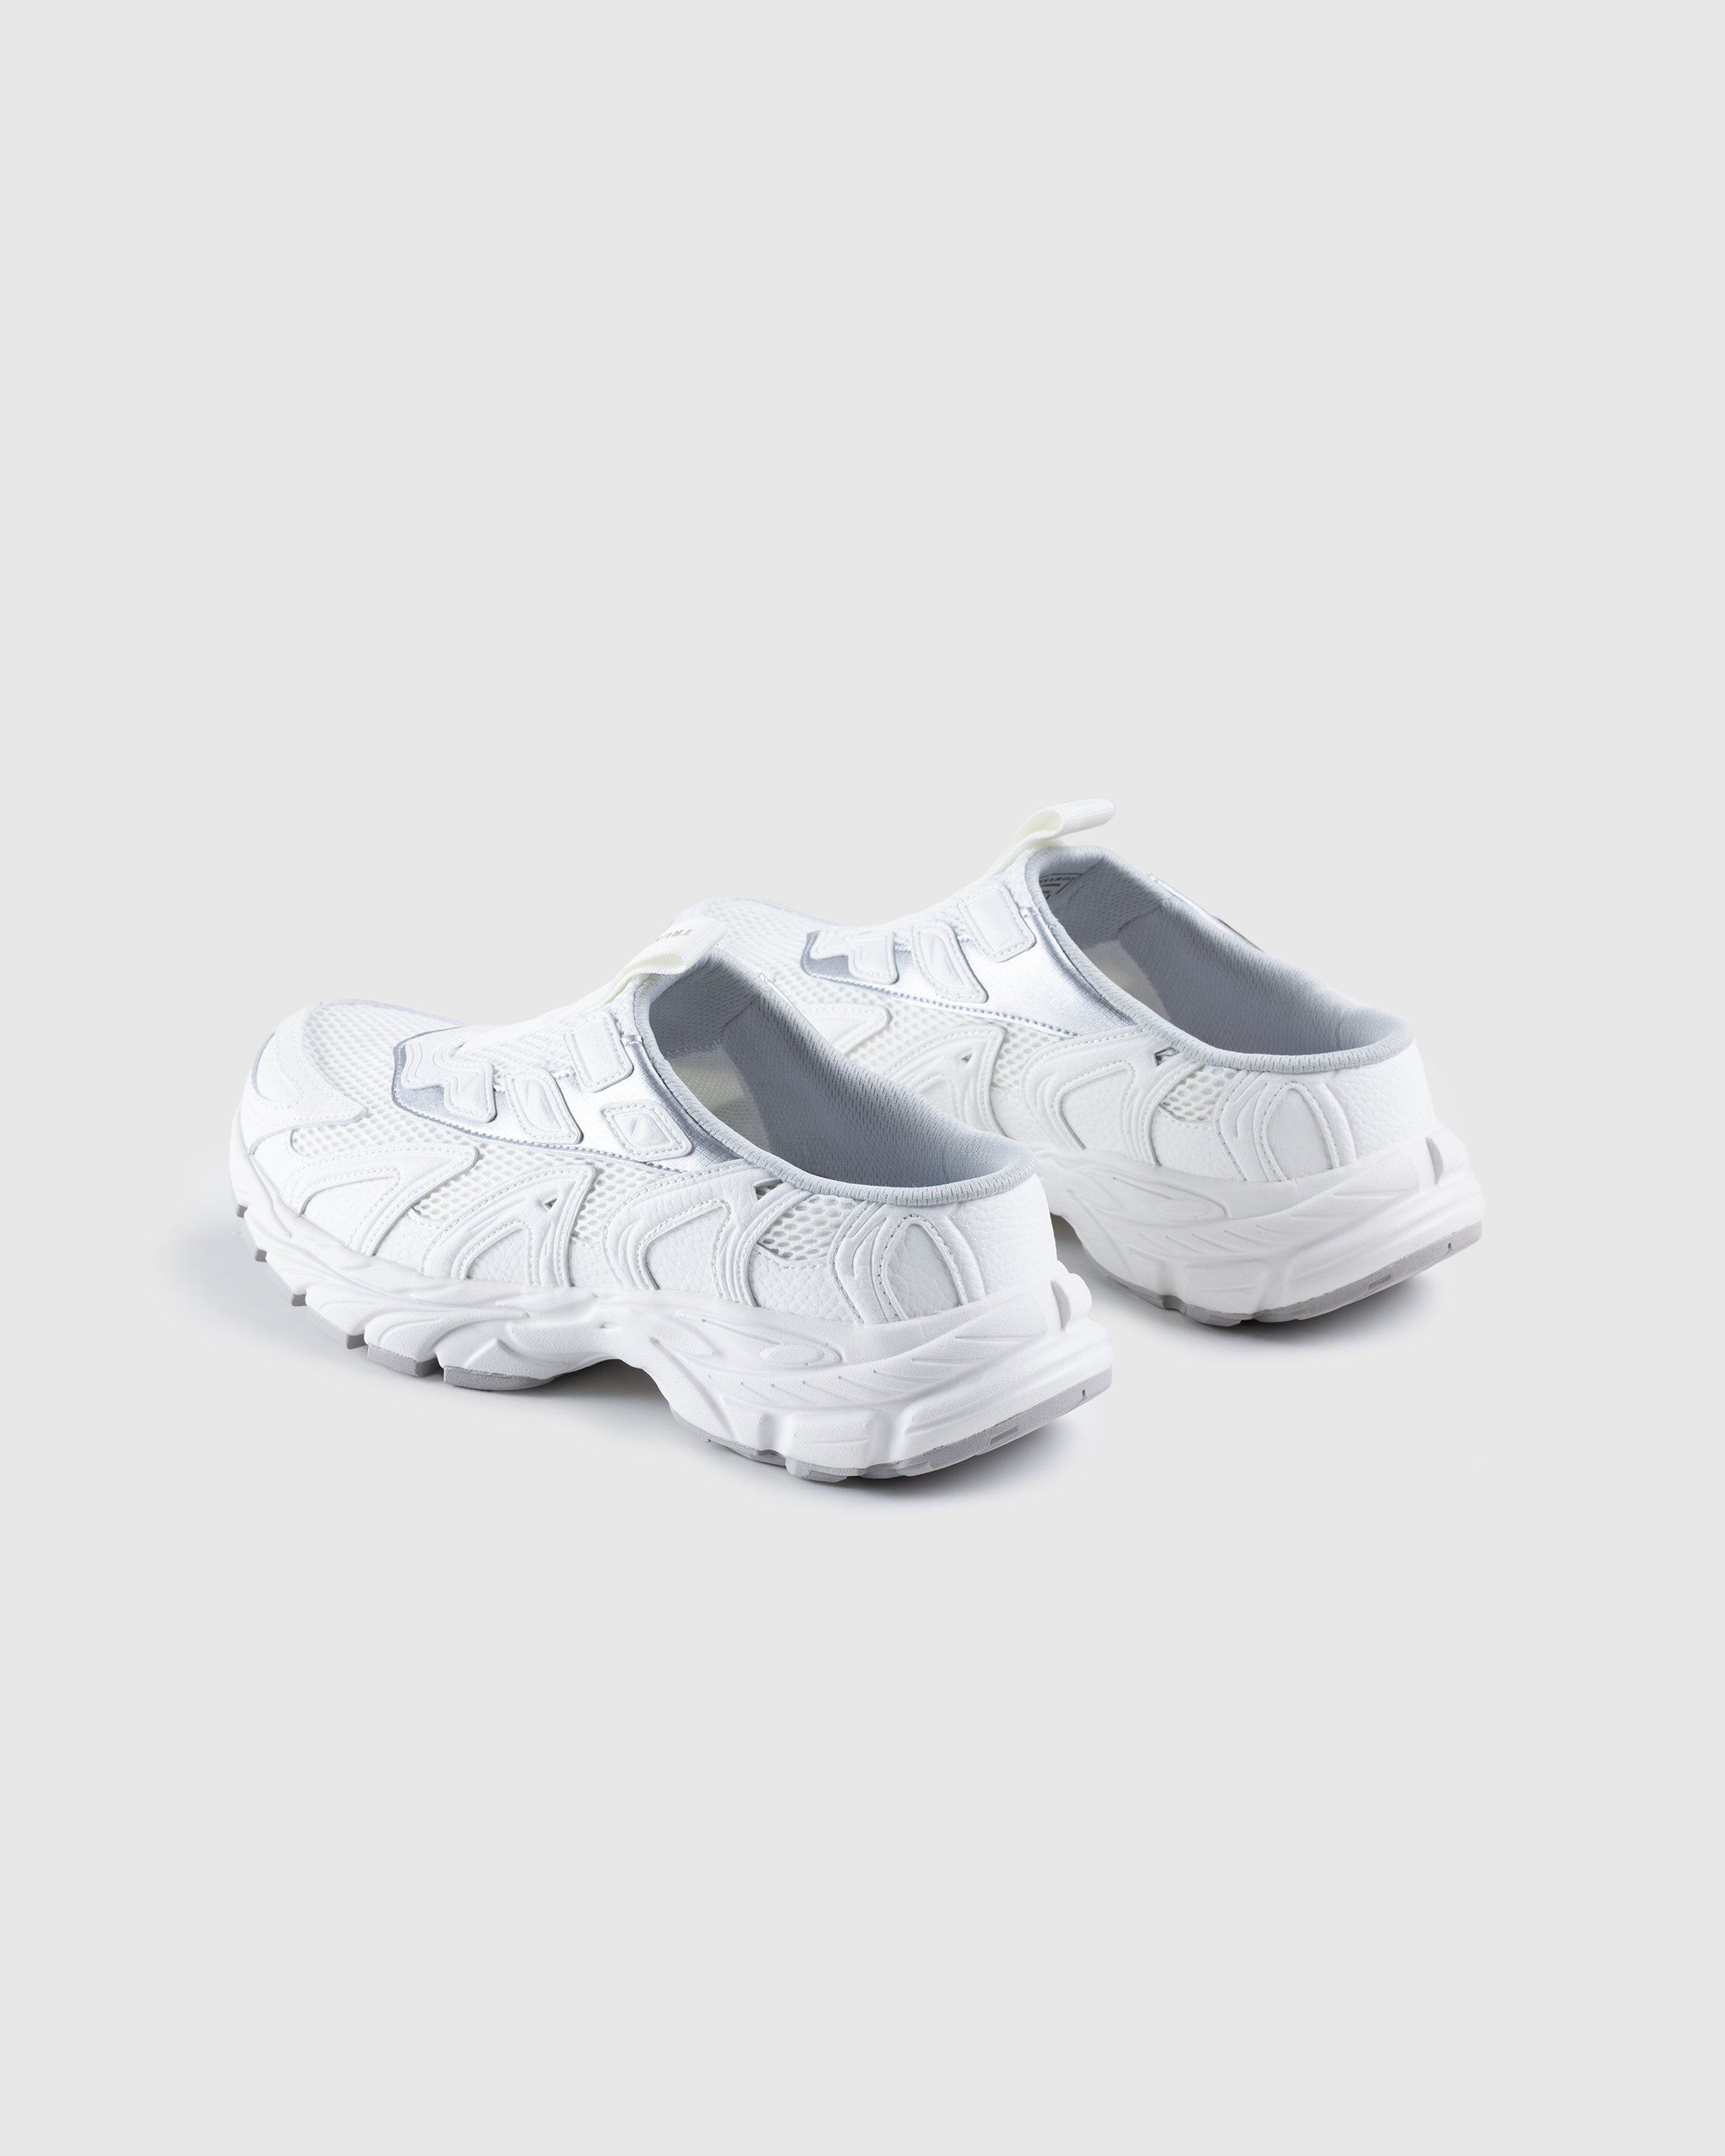 Trussardi – Retro Mule Sneaker - Sneakers - White - Image 3